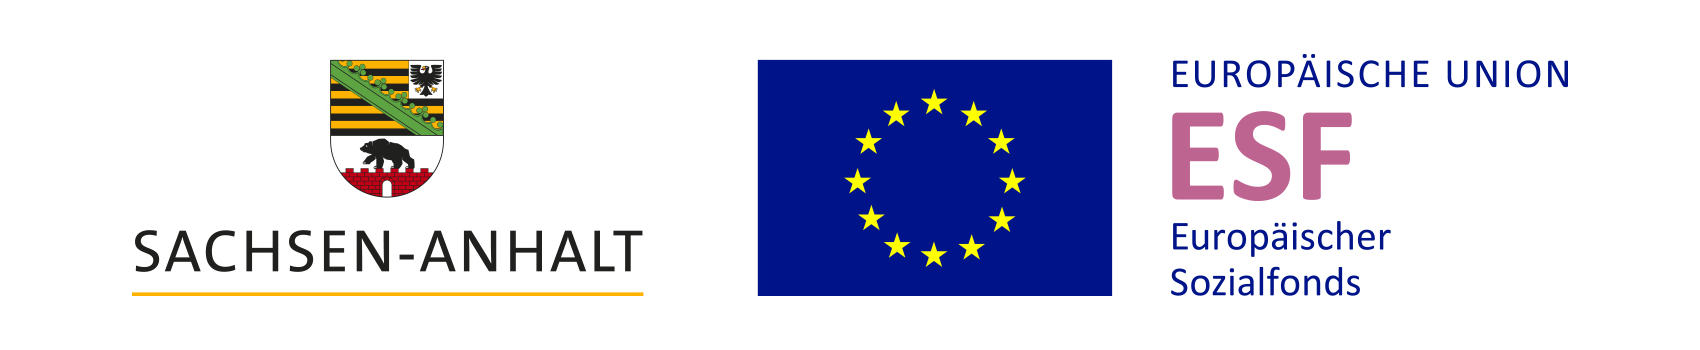 EU-Förderung